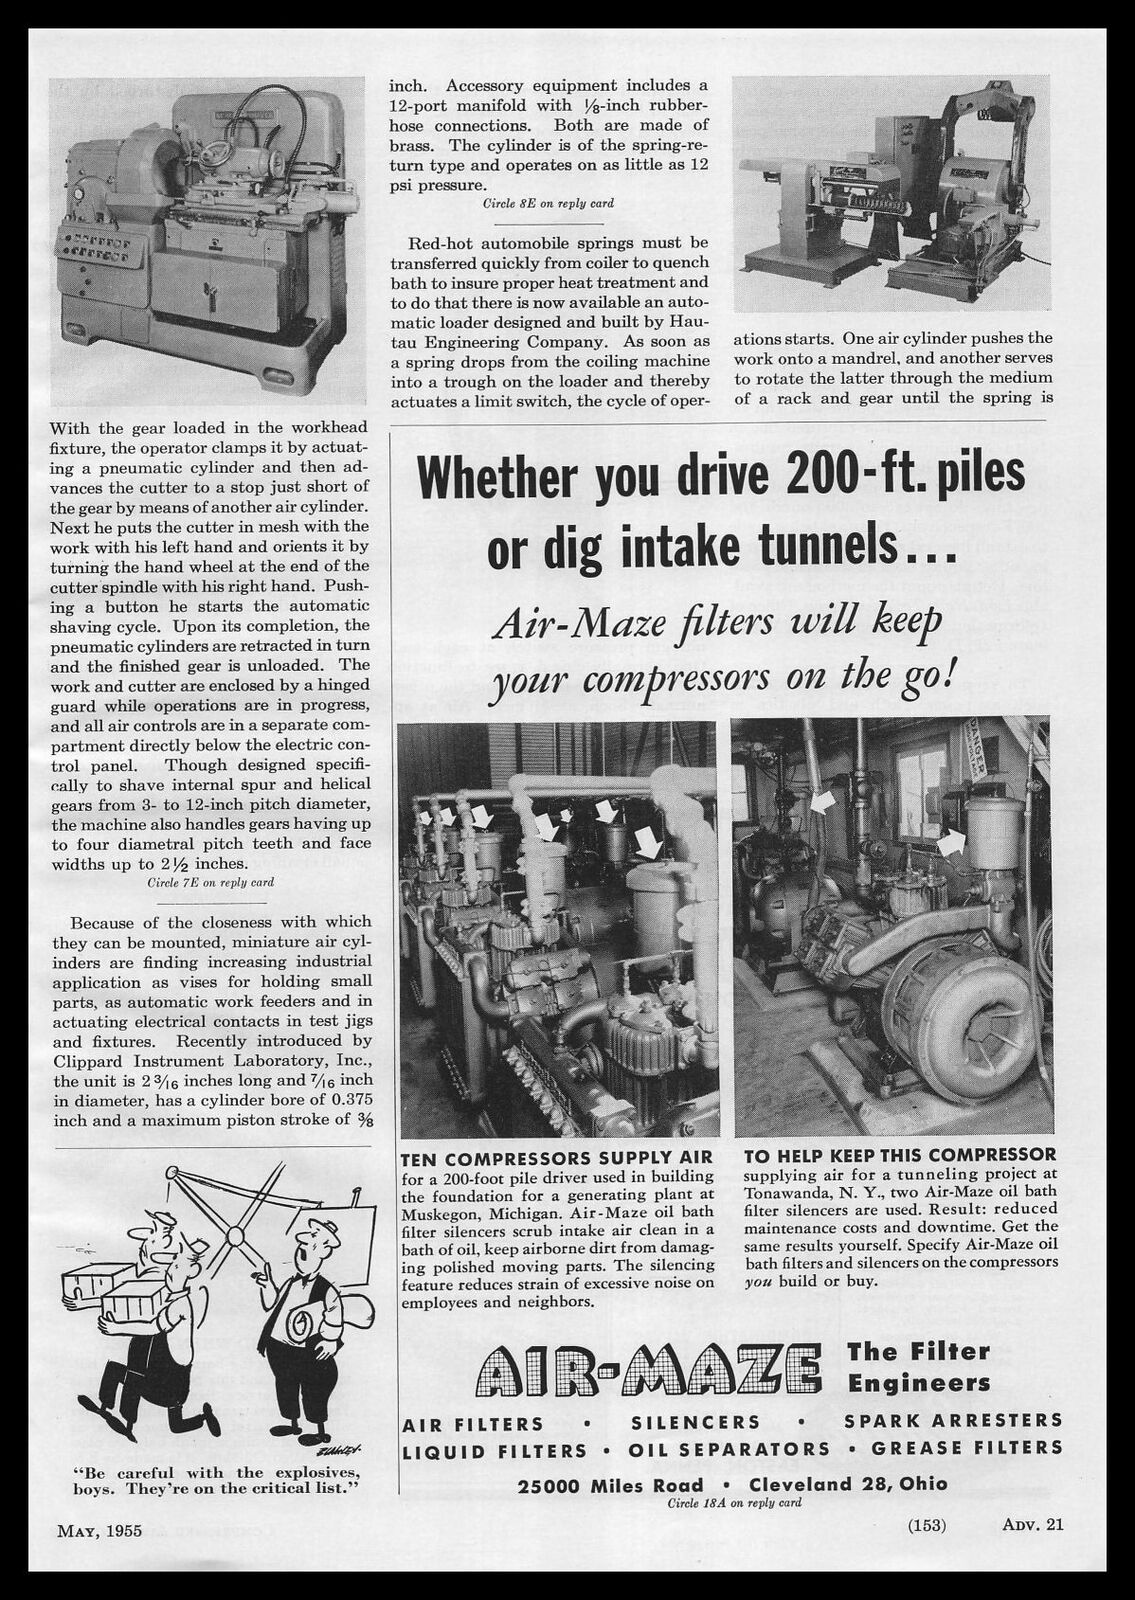 1955 Air-Maze Air Filters Tonawanda New York Tunneling Project Photo Print Ad